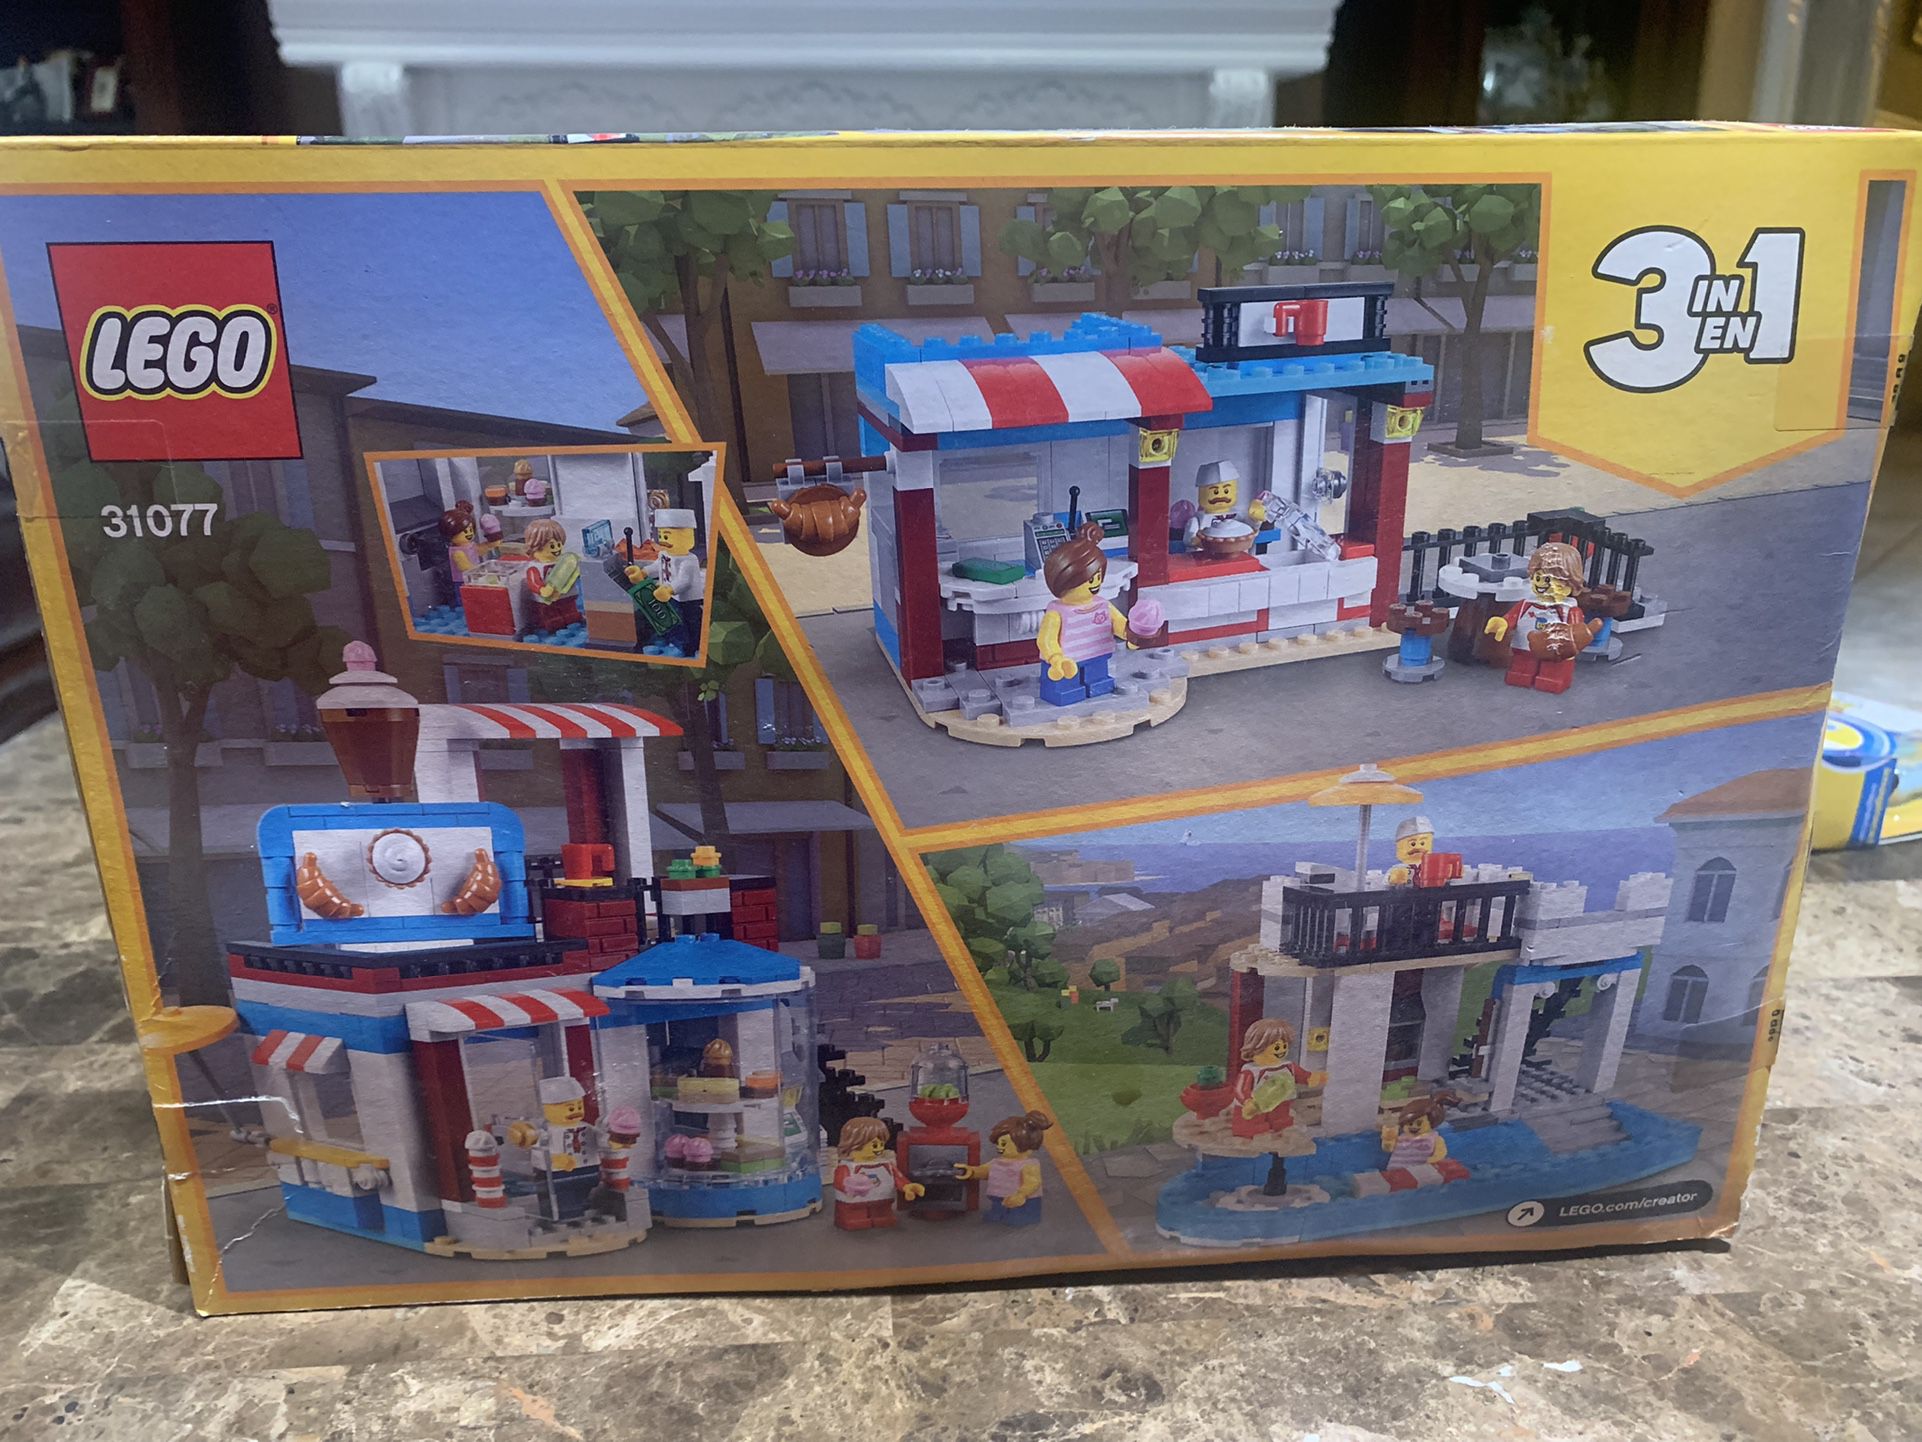 NIB LEGO Creator 3-in-1: Modular Surprises Lego 31077 for Sale in Salinas, CA - OfferUp